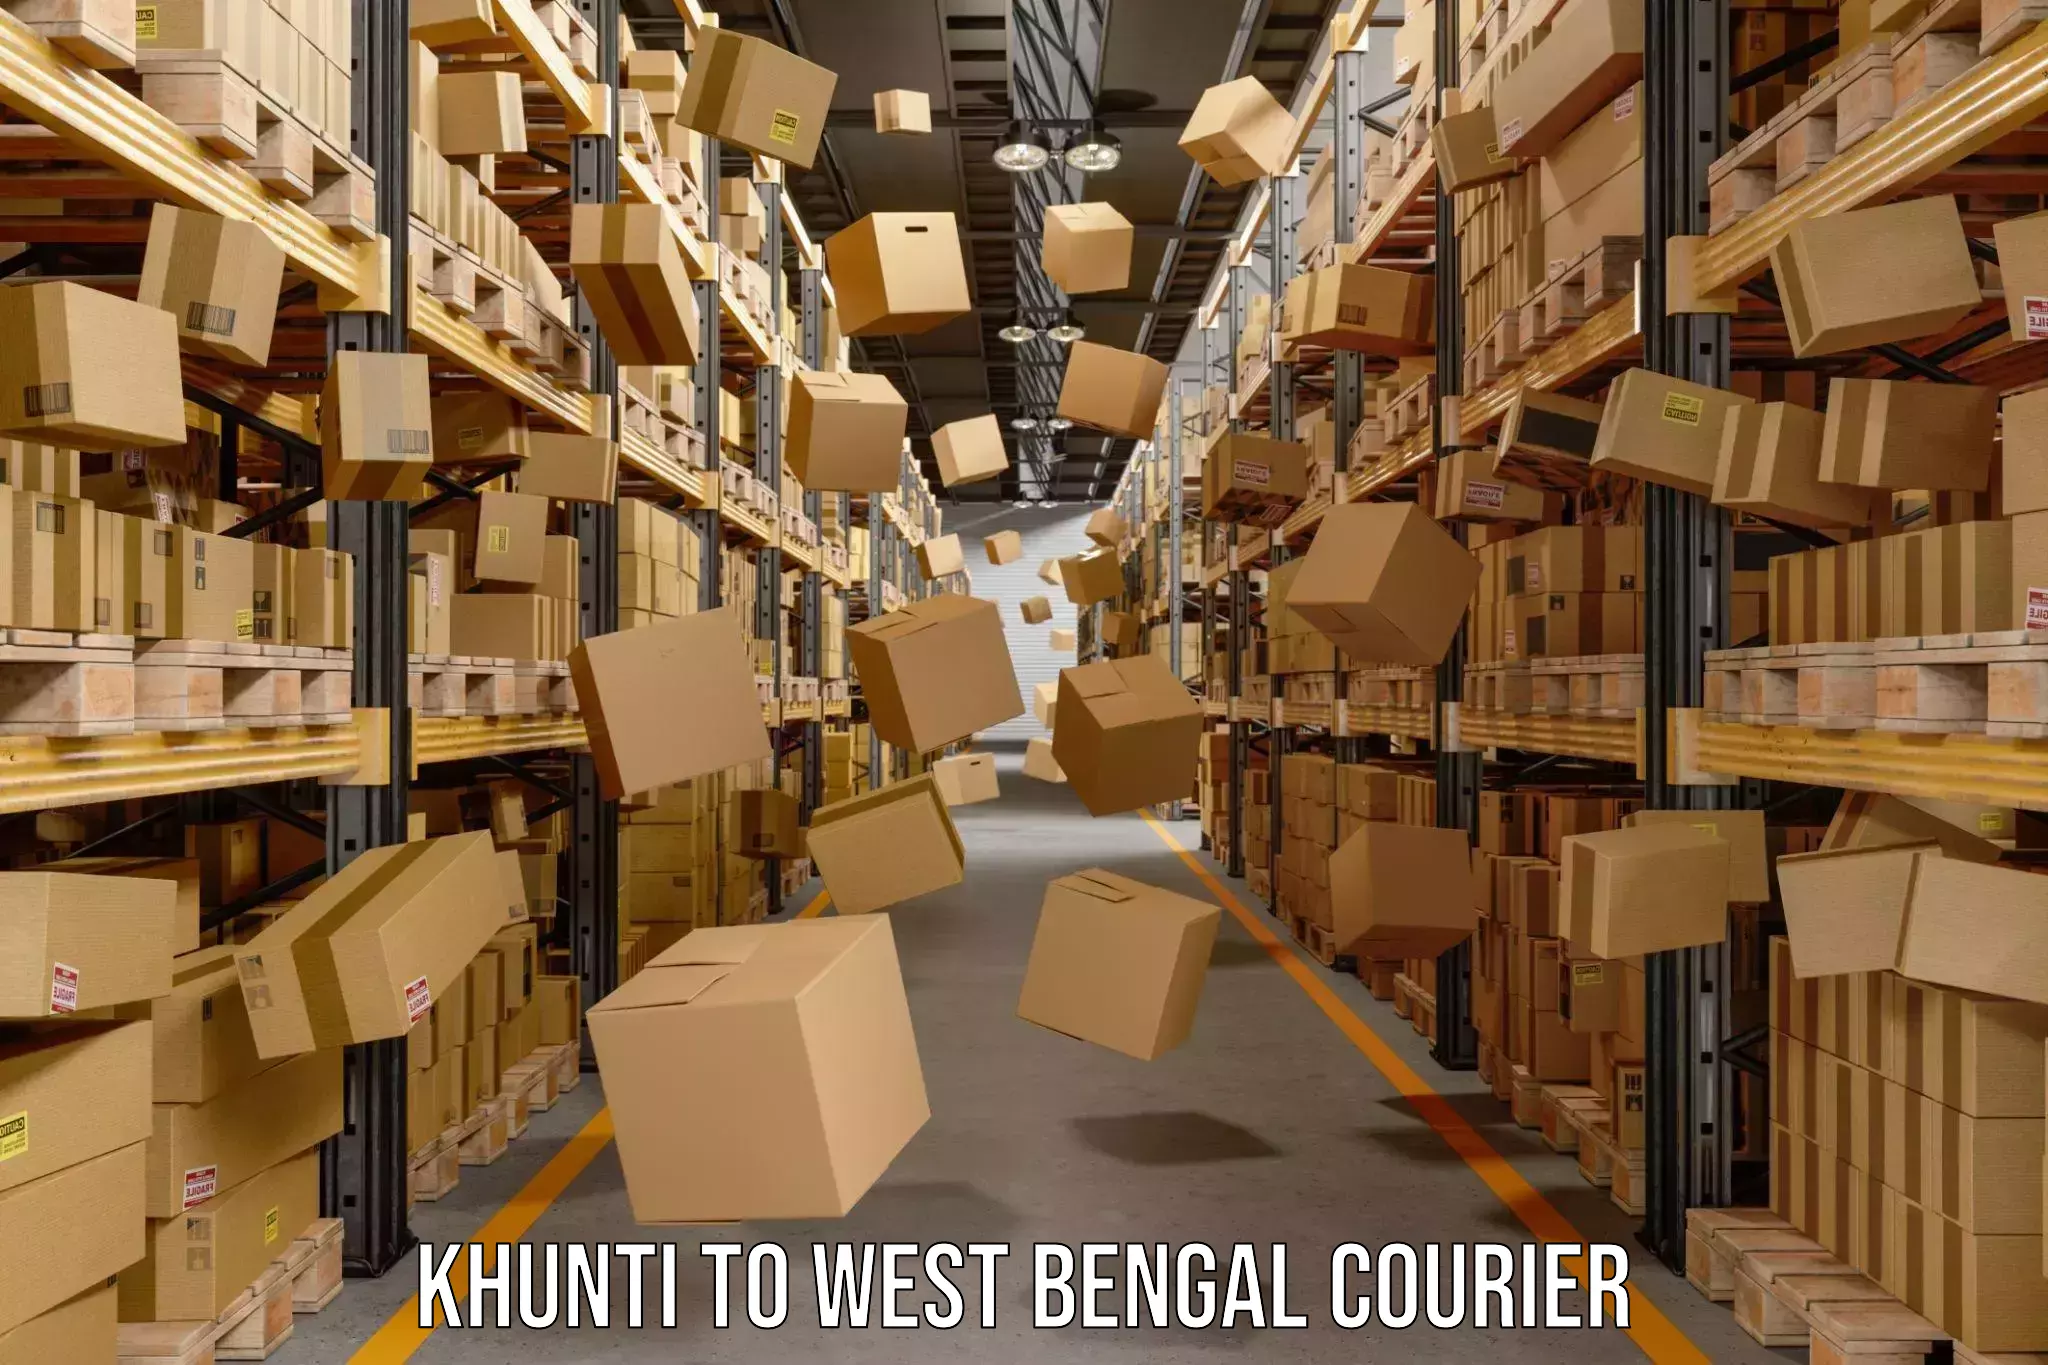 Global courier networks Khunti to Shantiniketan